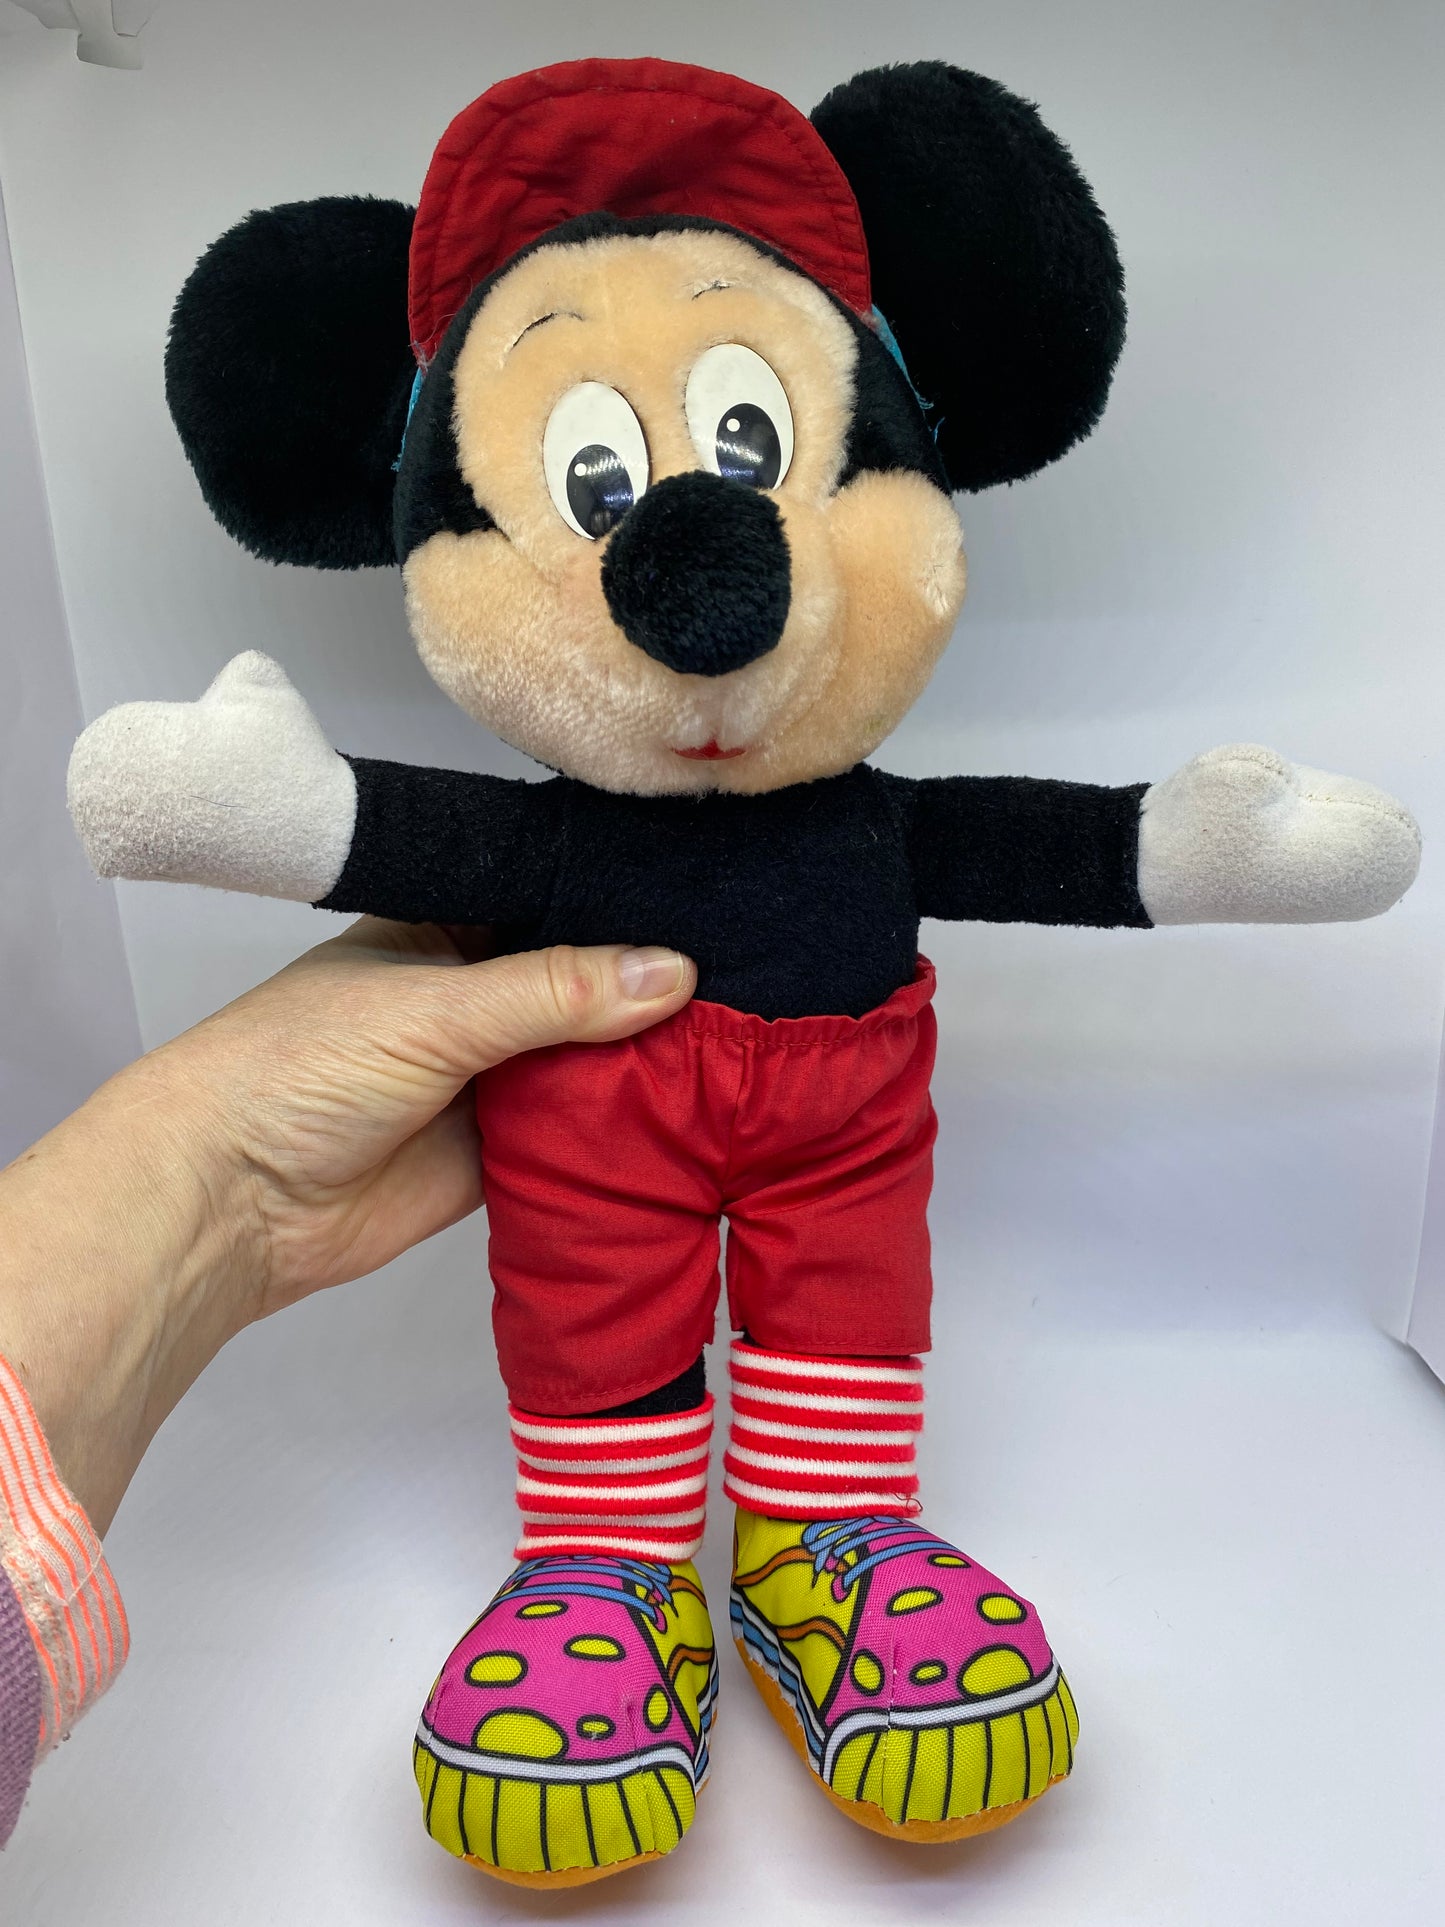 Walt Disney Vintage toy - Mickey Mouse - 1980s